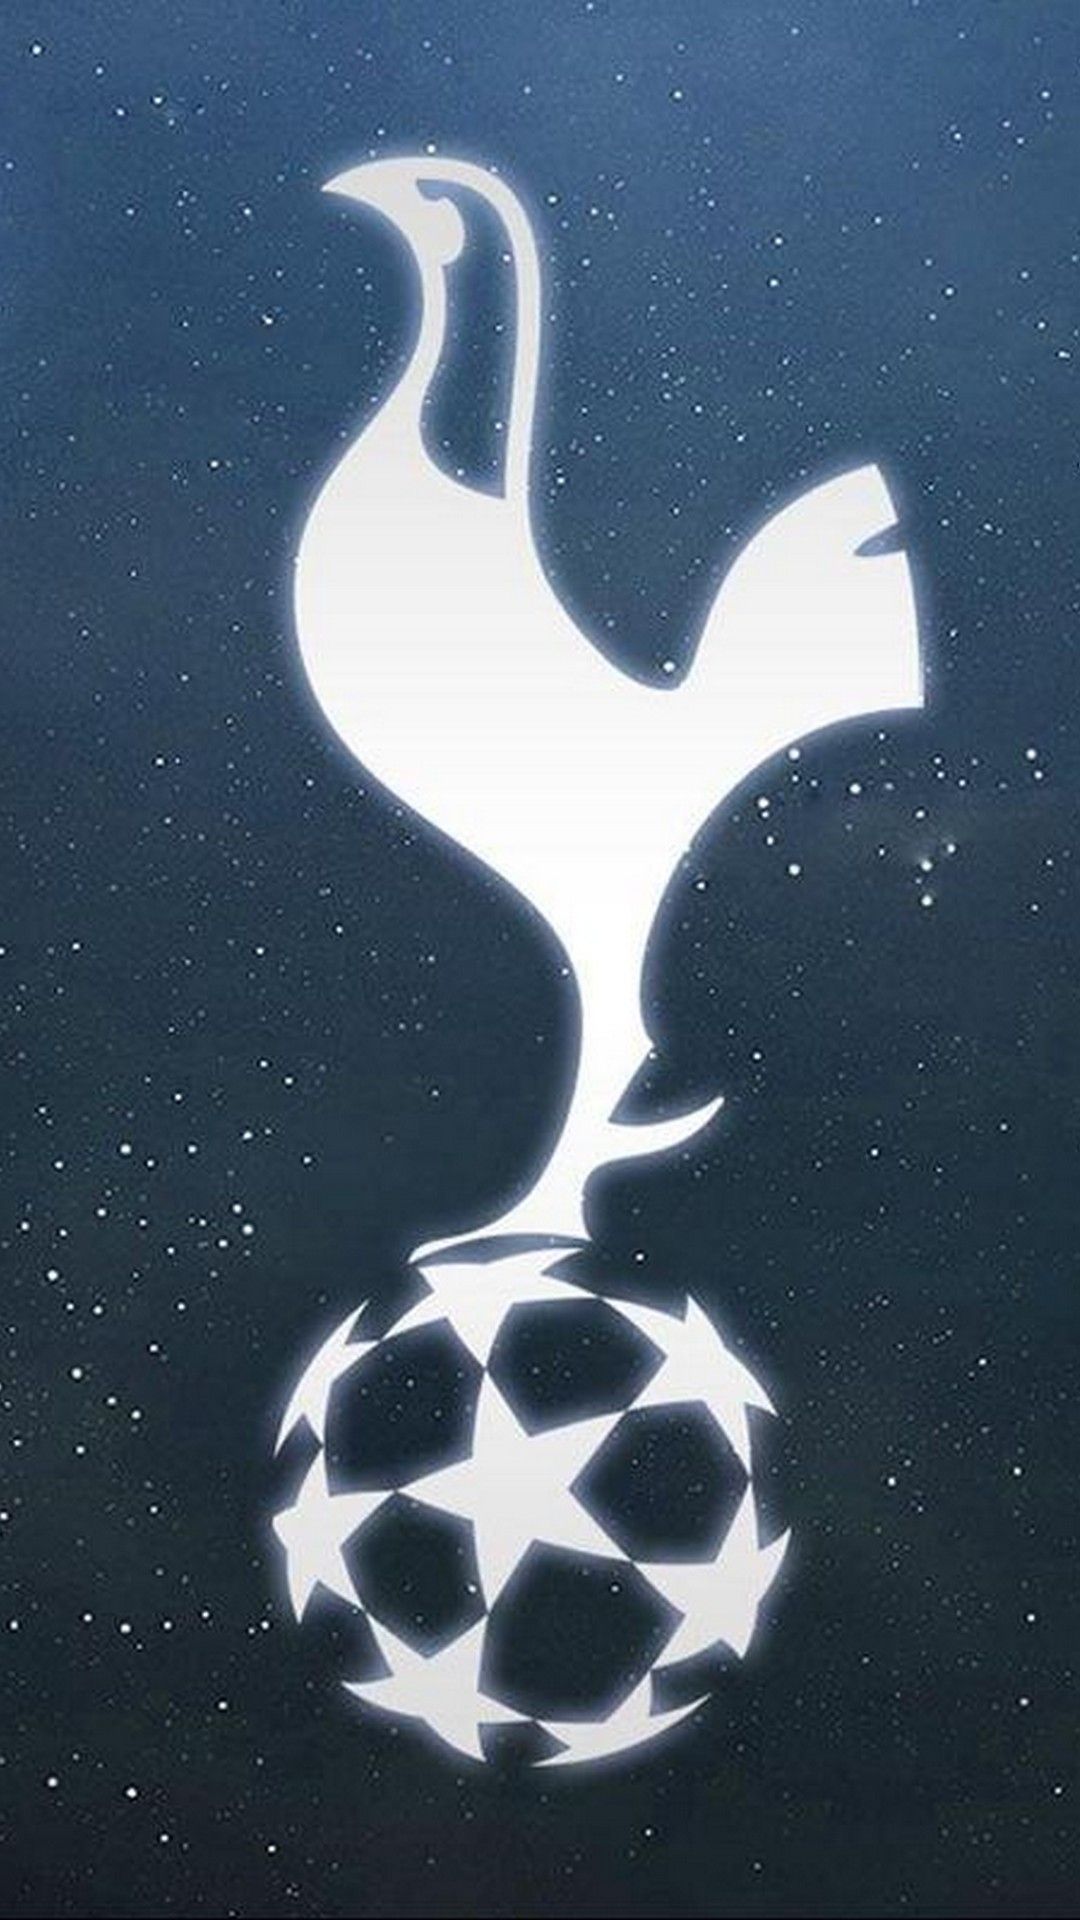 IPhone Wallpaper Tottenham Hotspur With High Resolution